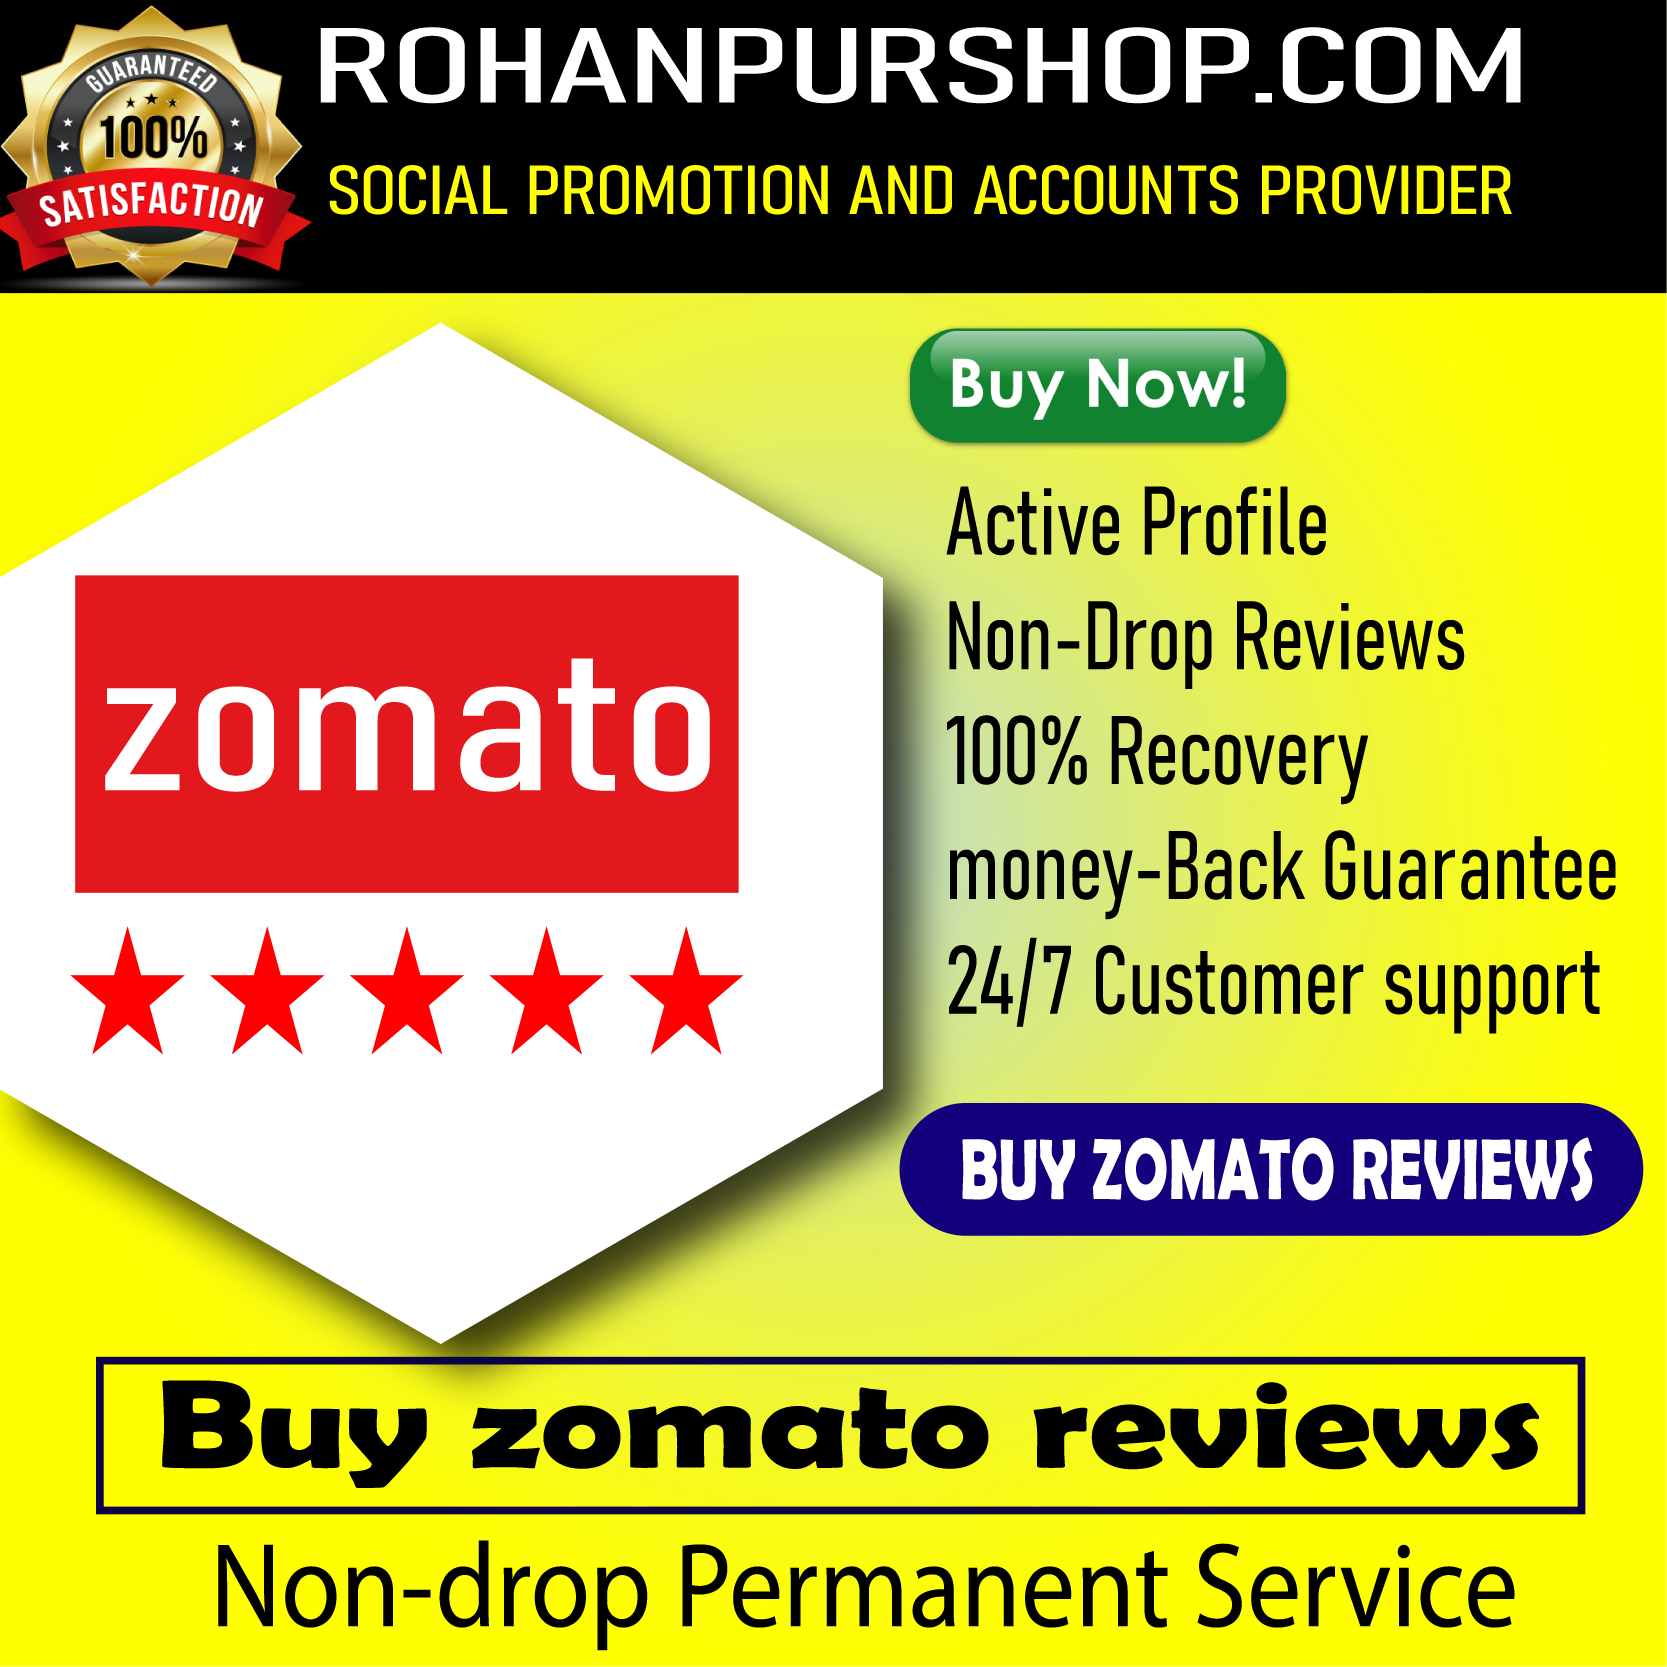 Buy Zomato Reviews - Zomato Reviews Buy